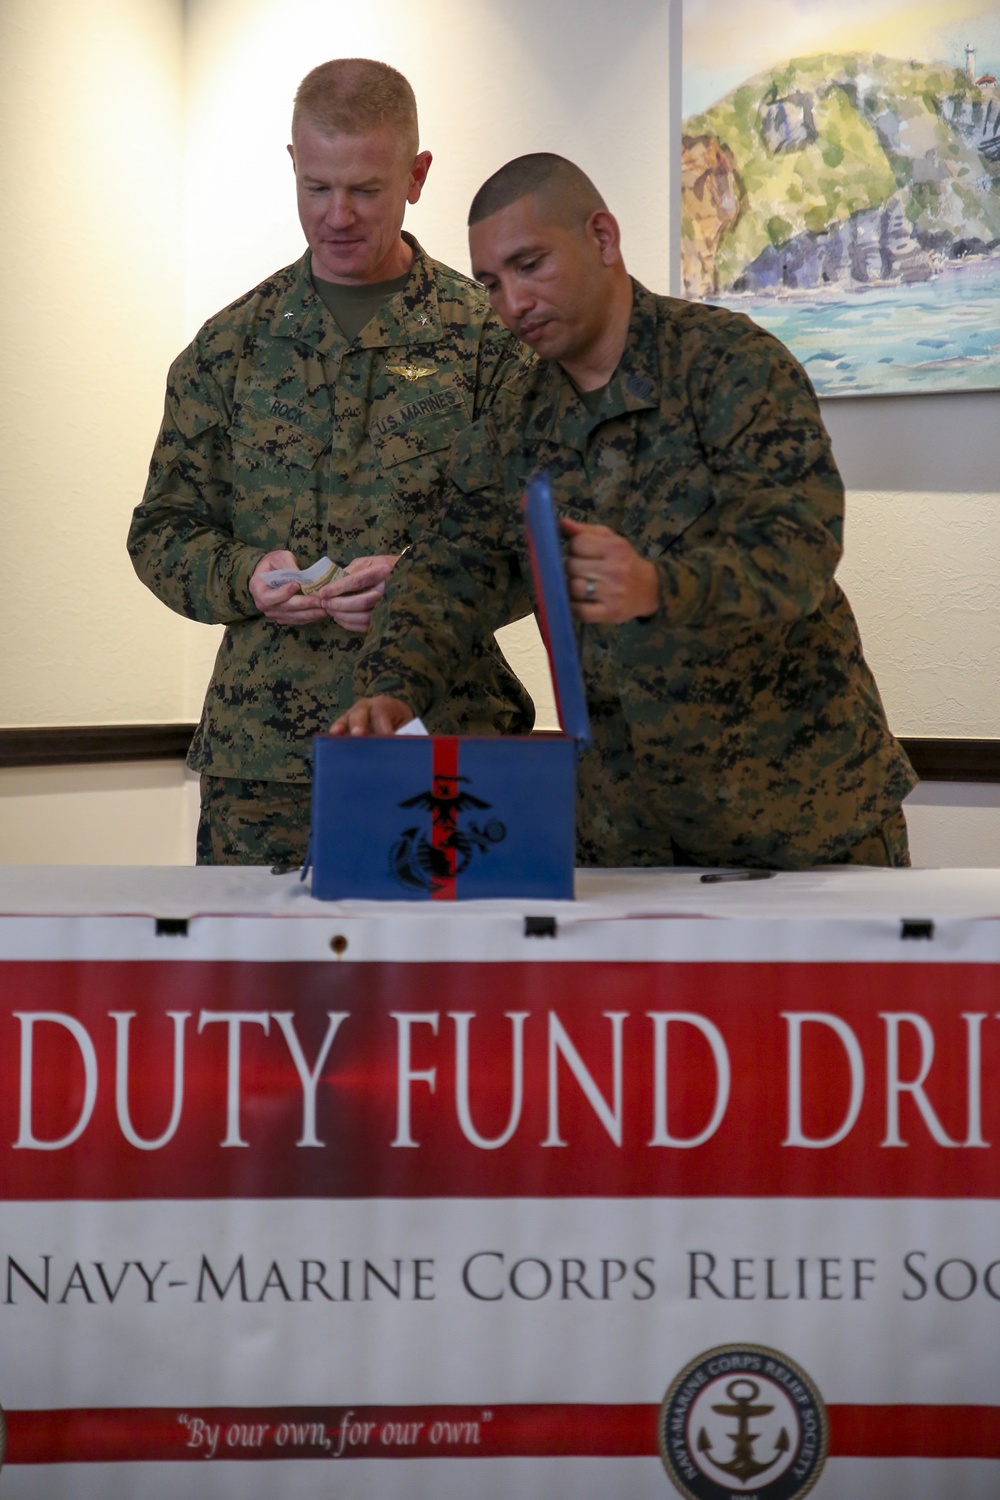 NMCRS Active Duty Fund Drive kicks off in Okinawa